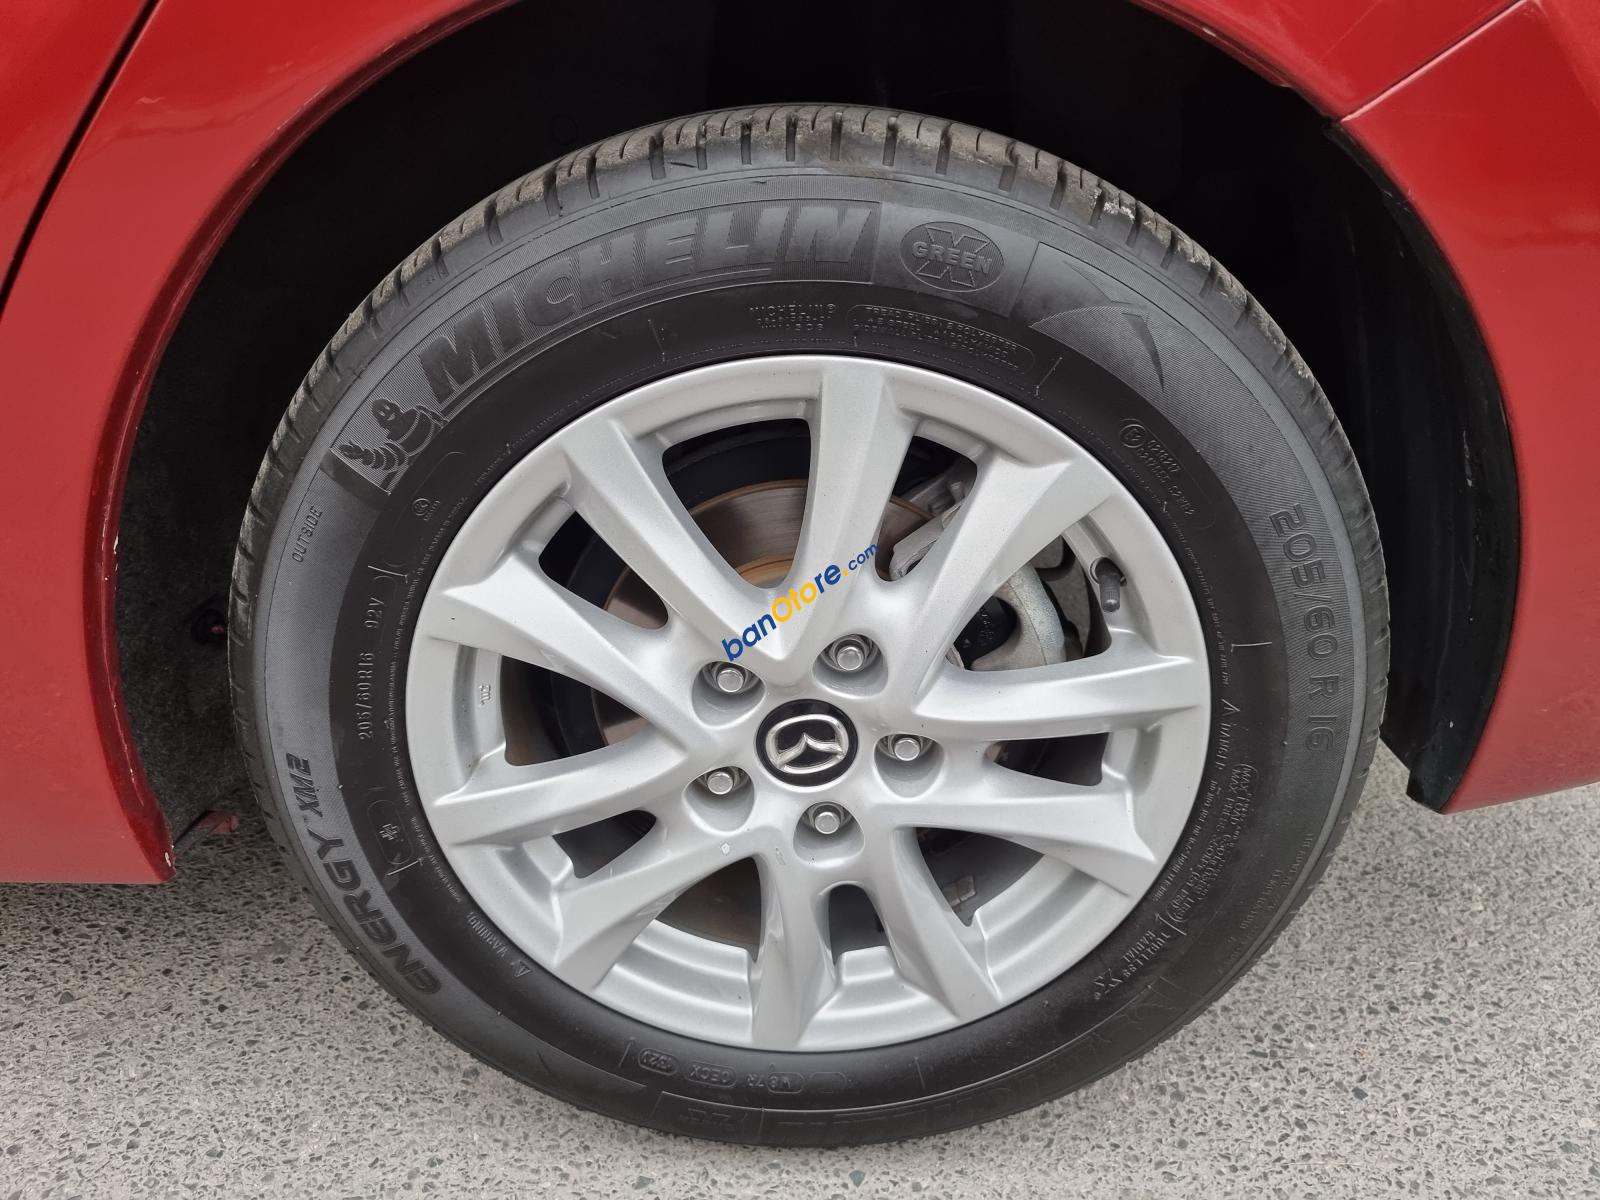 Mazda 3 2017 - model 2018 phanh điện tử